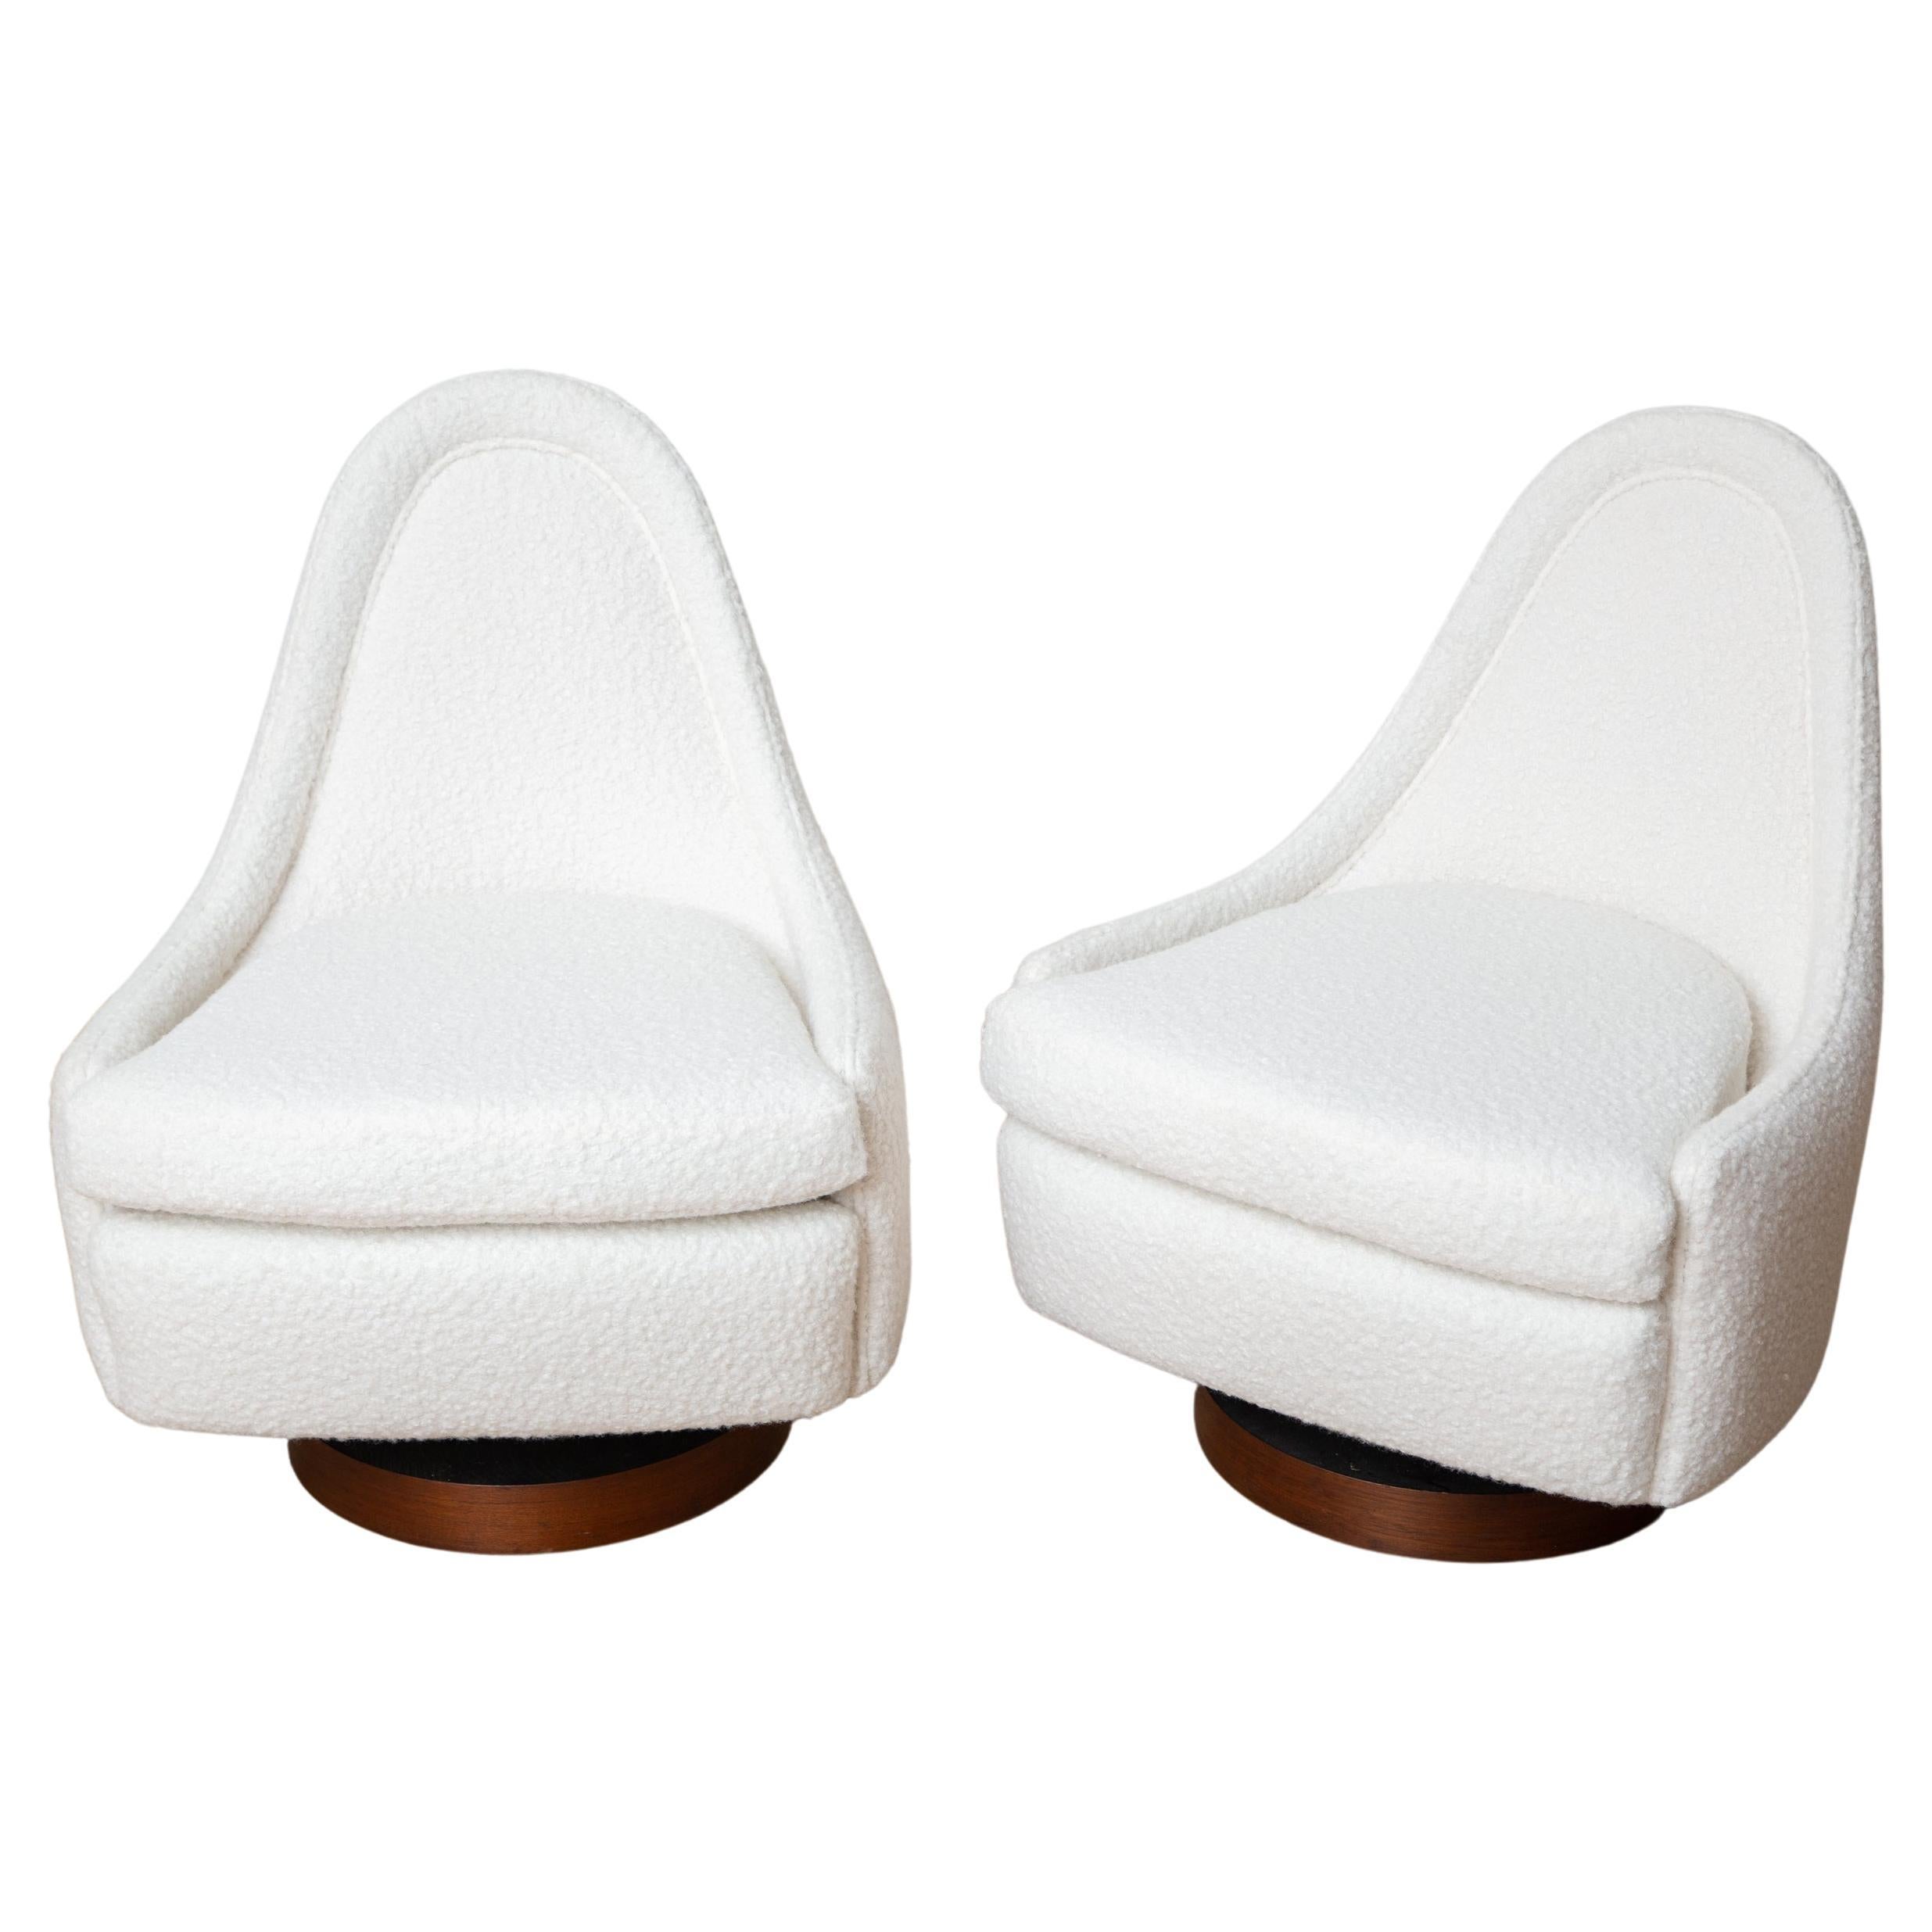 Mid-Century Modern Petite Tilt and Swivel Lounge Chairs by Milo Baughman